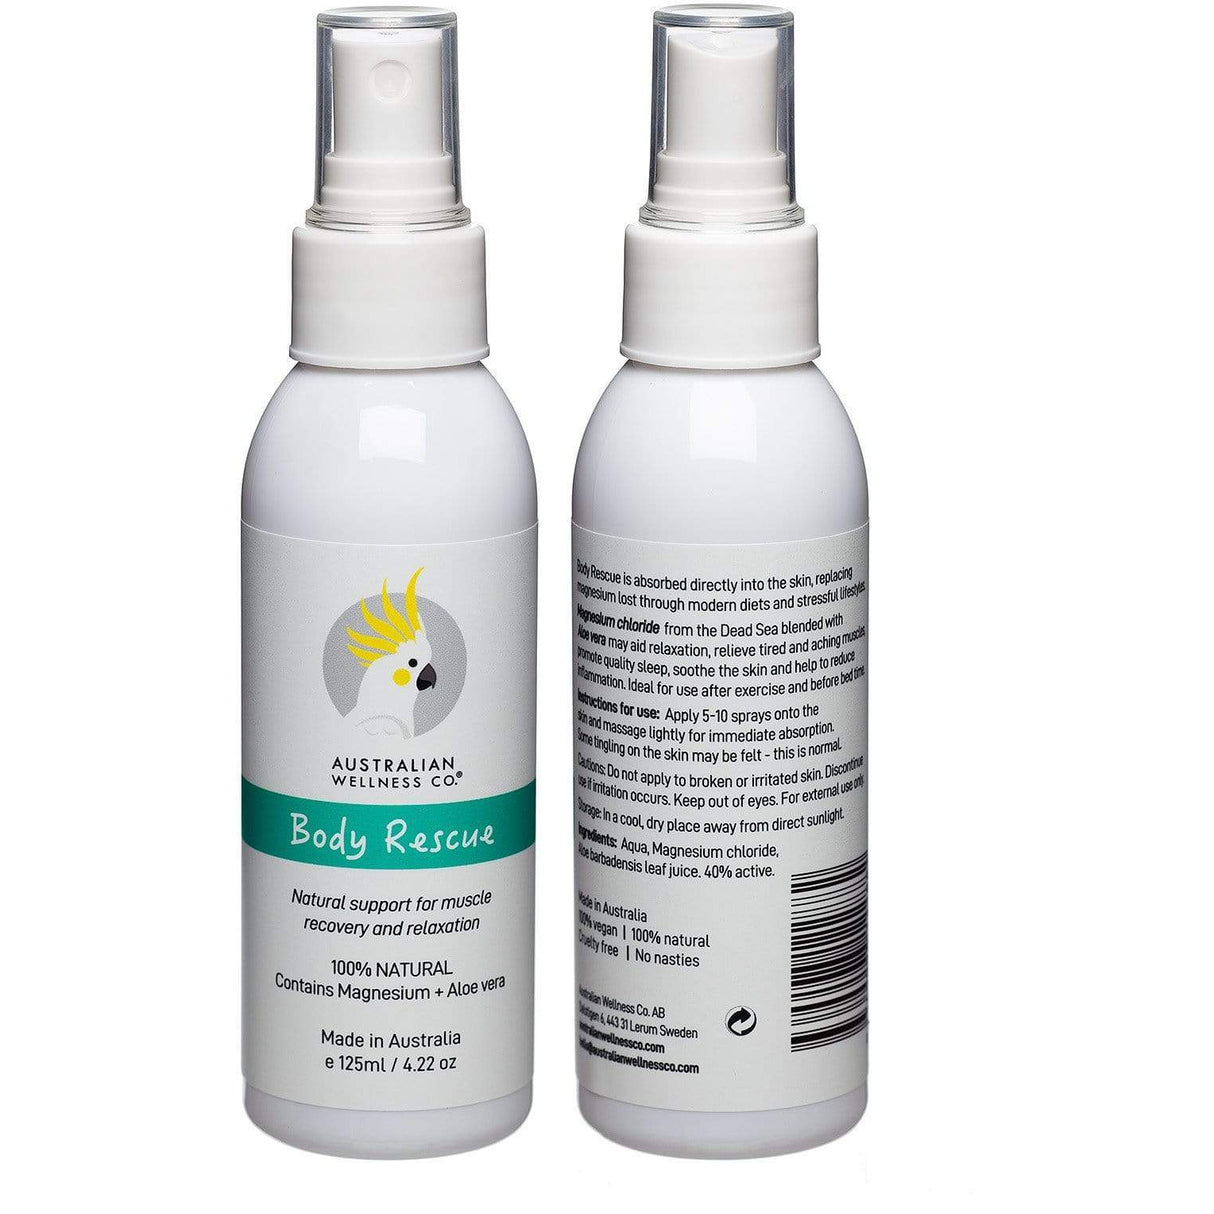 Australian Wellness Co. Natural skincare BODY RESCUE Relaxation Spray [Magnesium Oil + Organic Aloe Vera] 4.22oz/125ml.